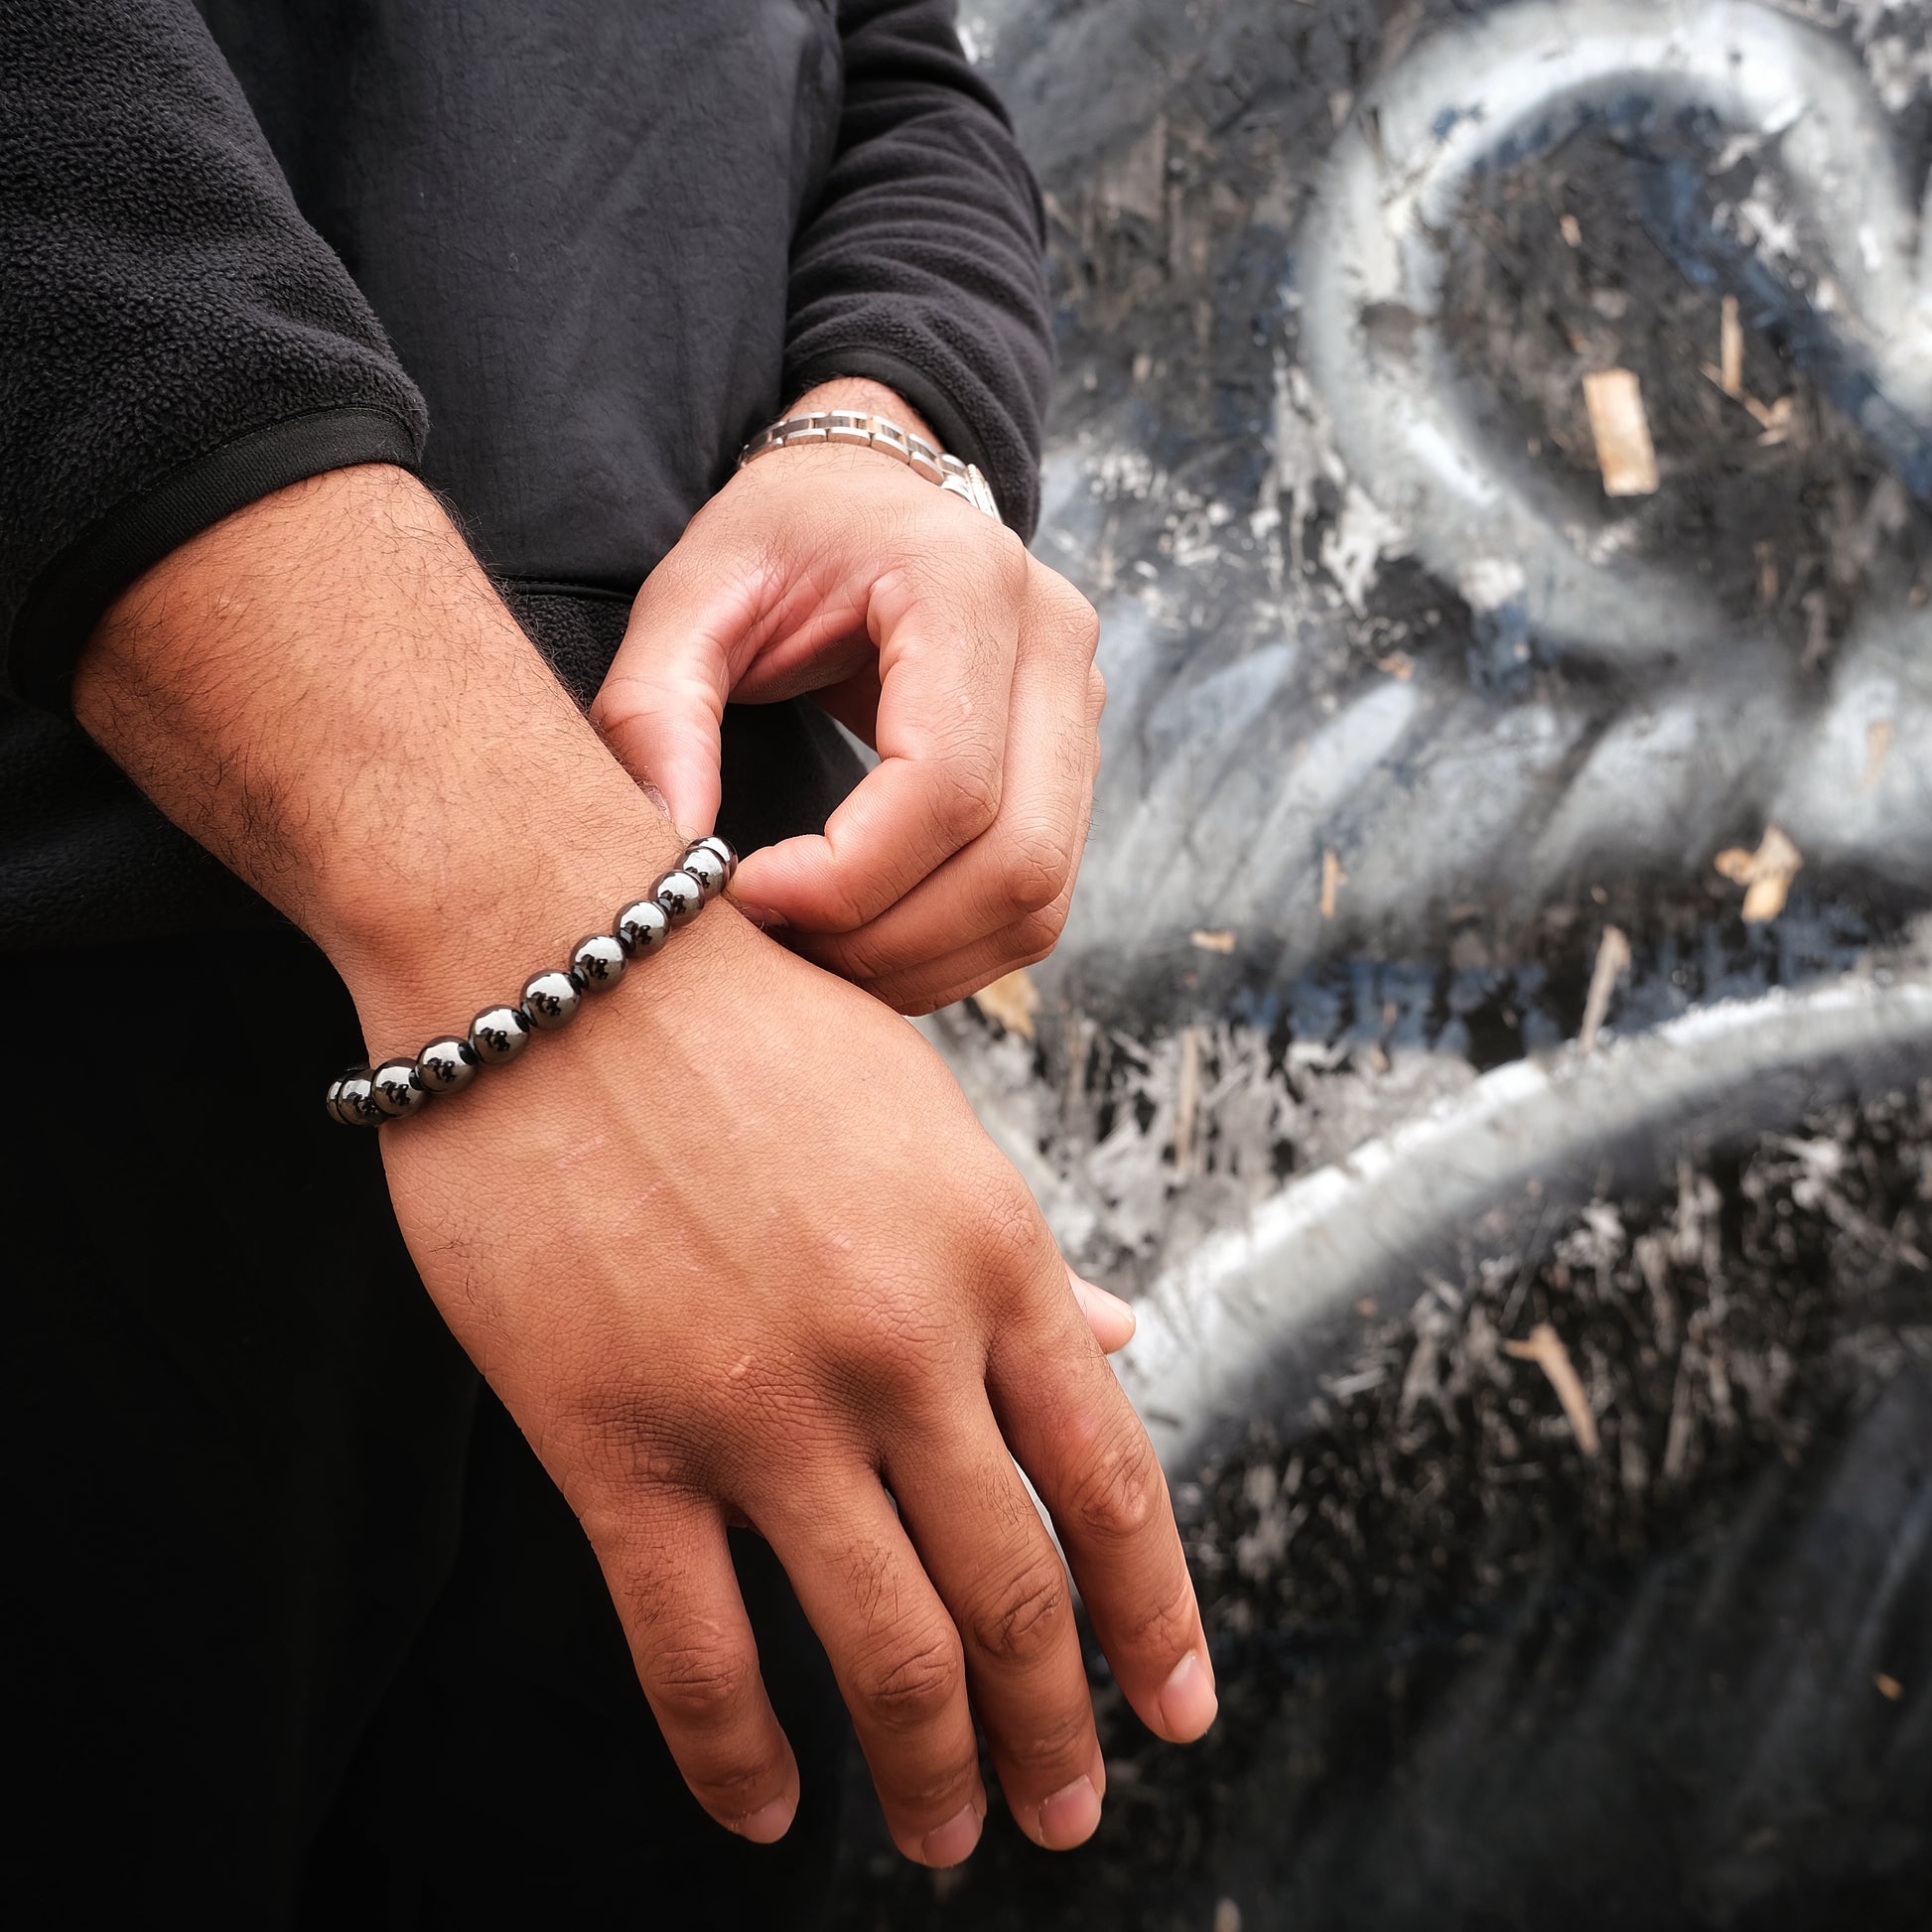 A model wearing a hematite gemstone bracelet in 10mm beads with steel accessory